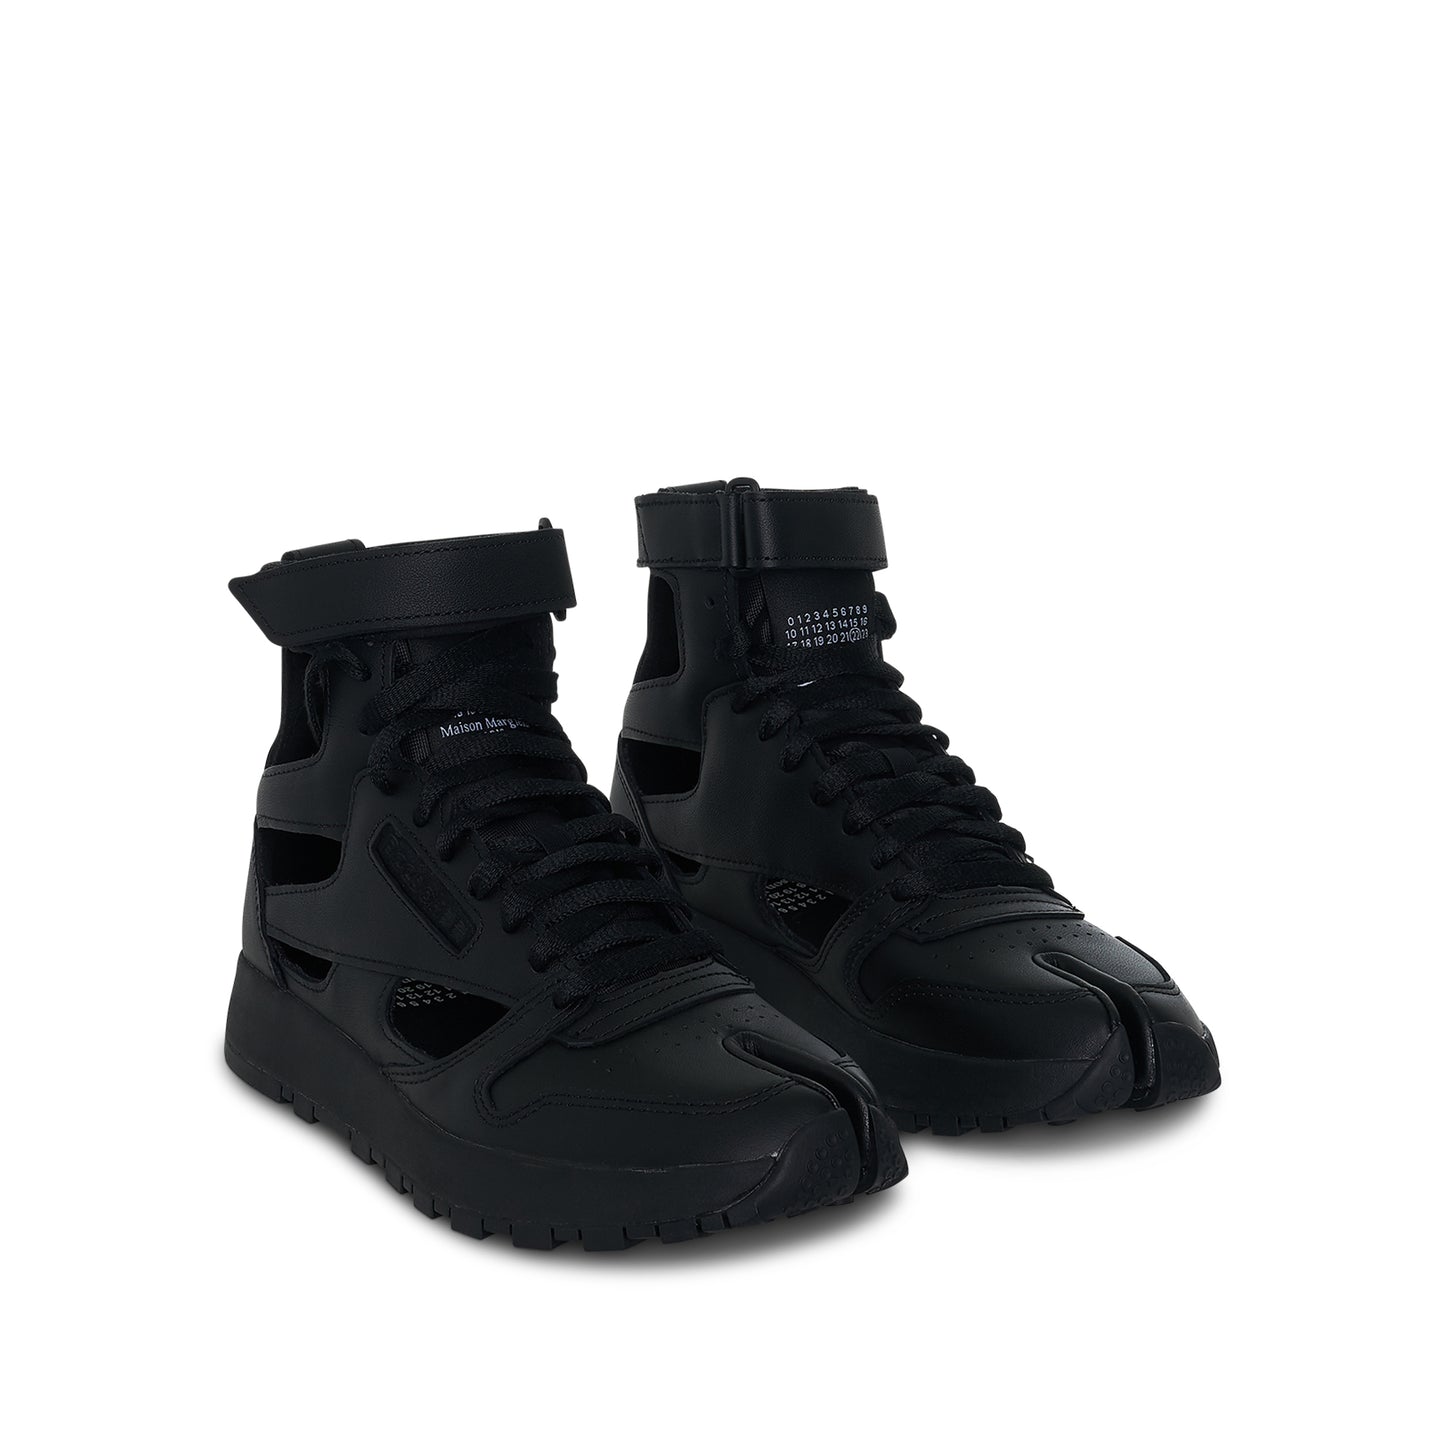 Maison Margiela x Reebok Tabi Gladiator High Sneakers in Black